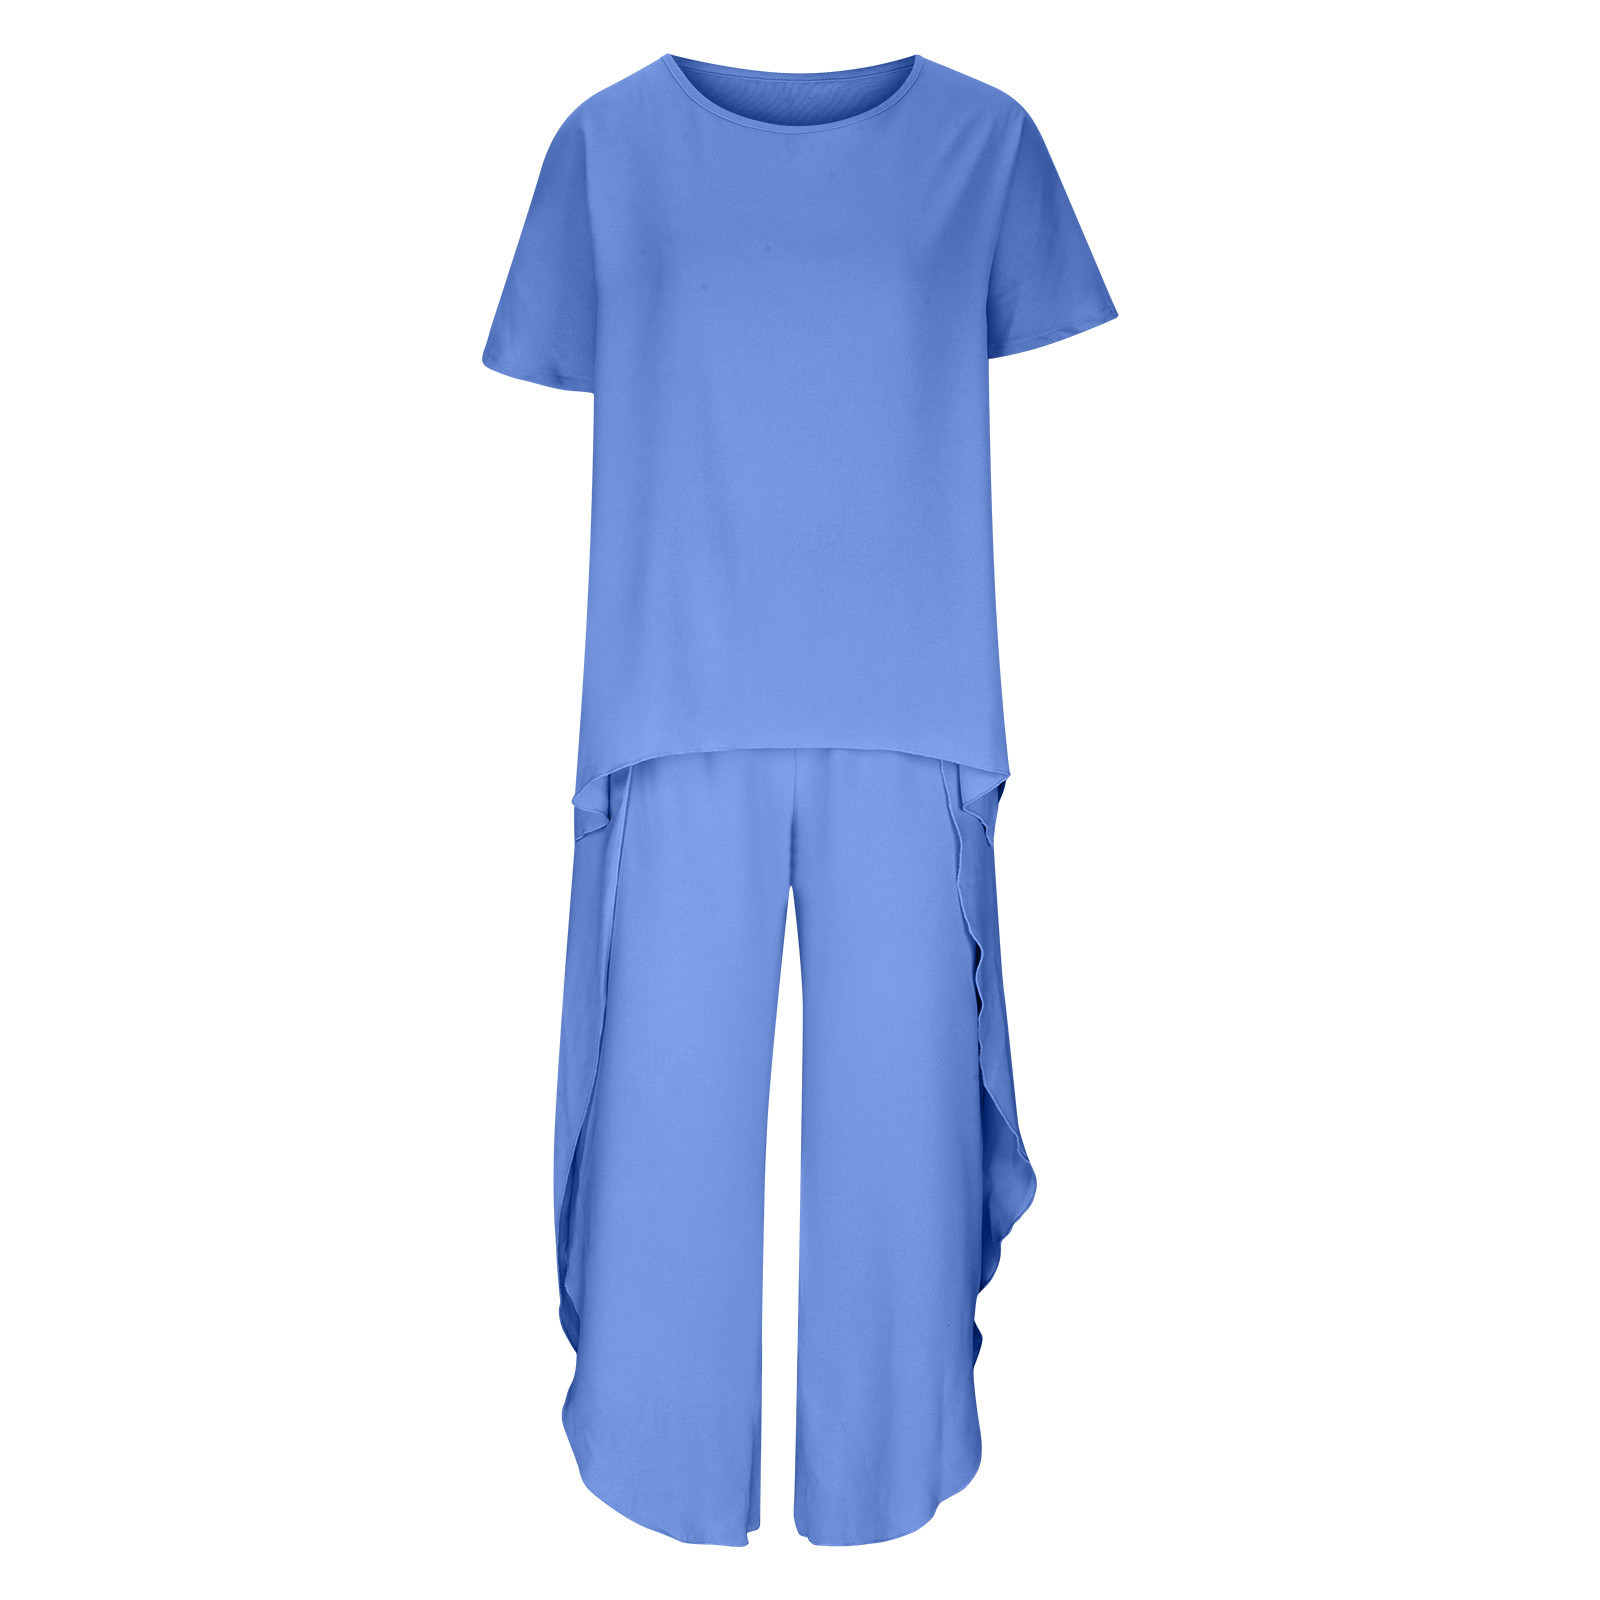 Edvintorg Women's Pajama Set Short Sleeve Shirt And Pants Sleepwear Pjs ...